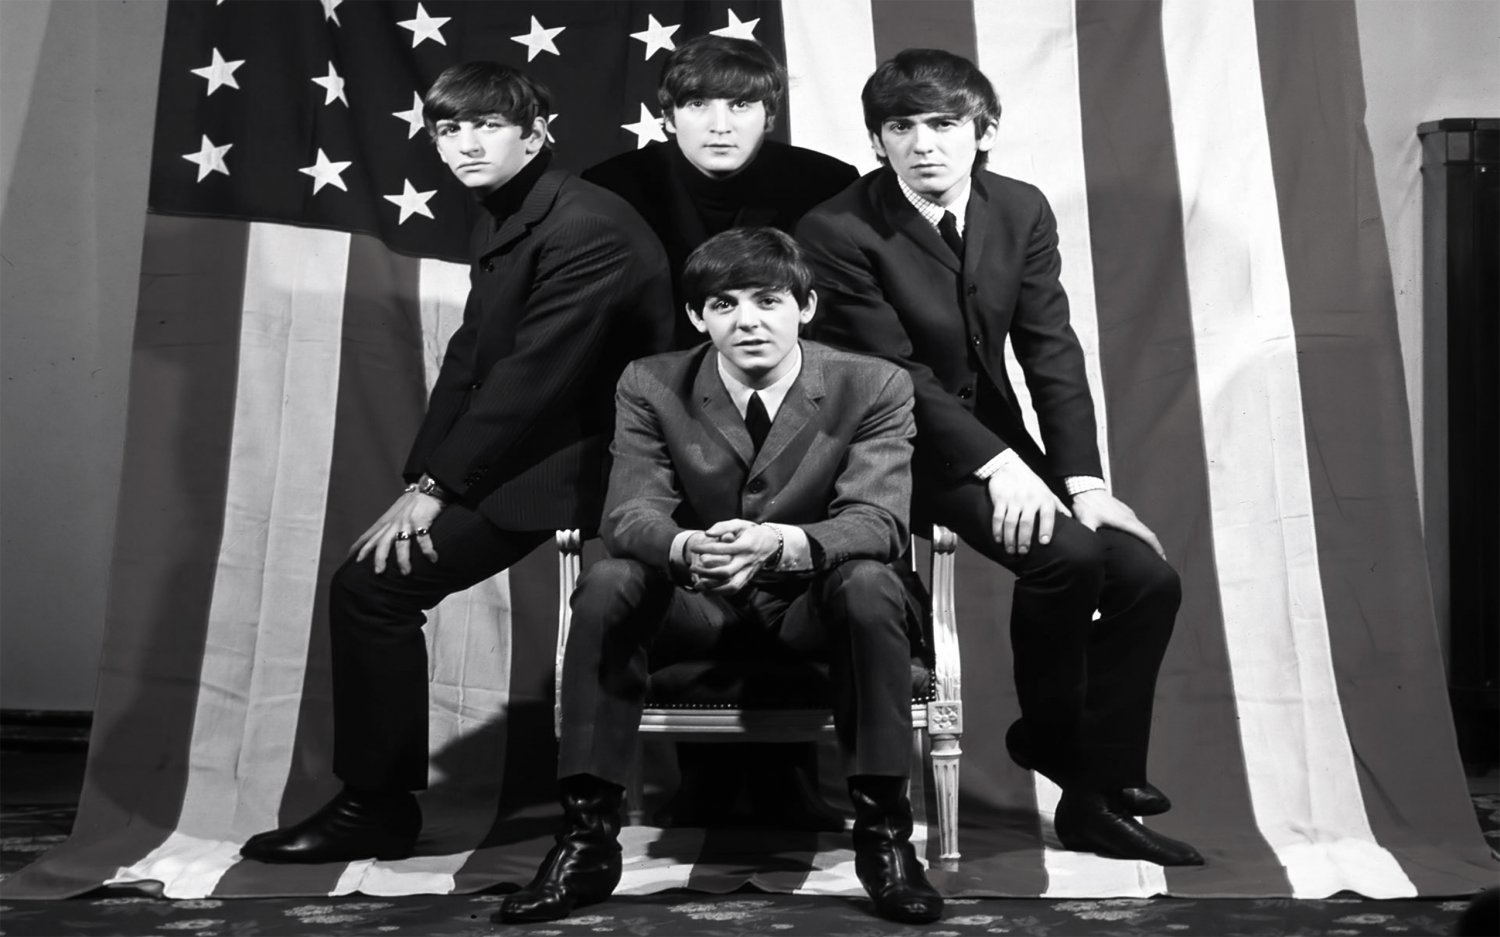 The Beatles  18"x28" (45cm/70cm) Poster